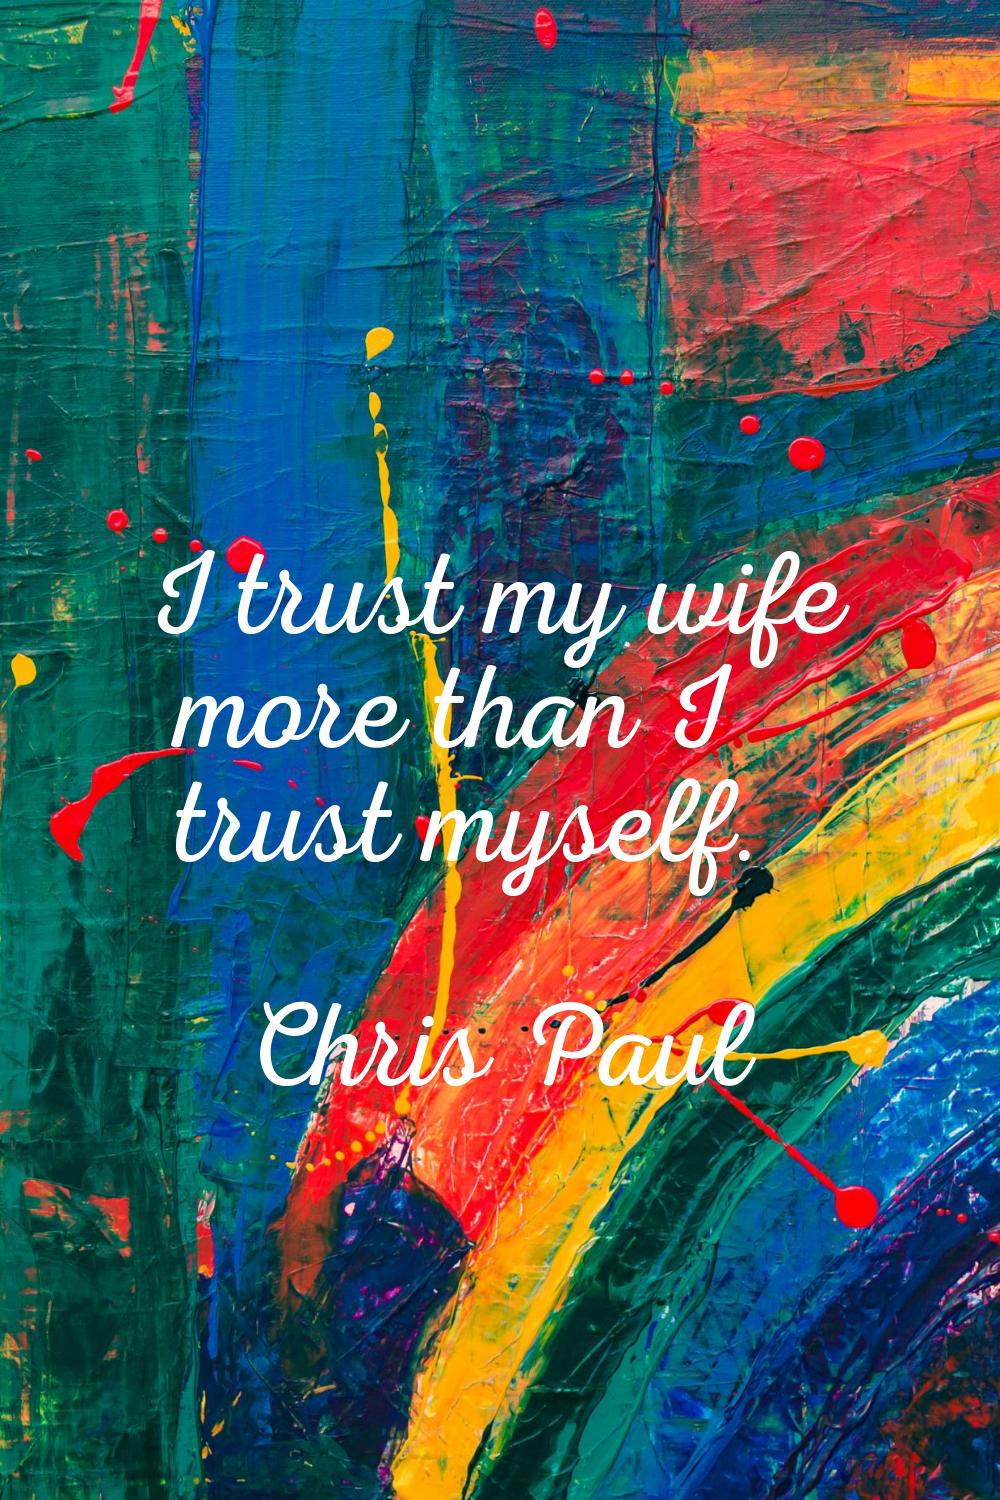 I trust my wife more than I trust myself.